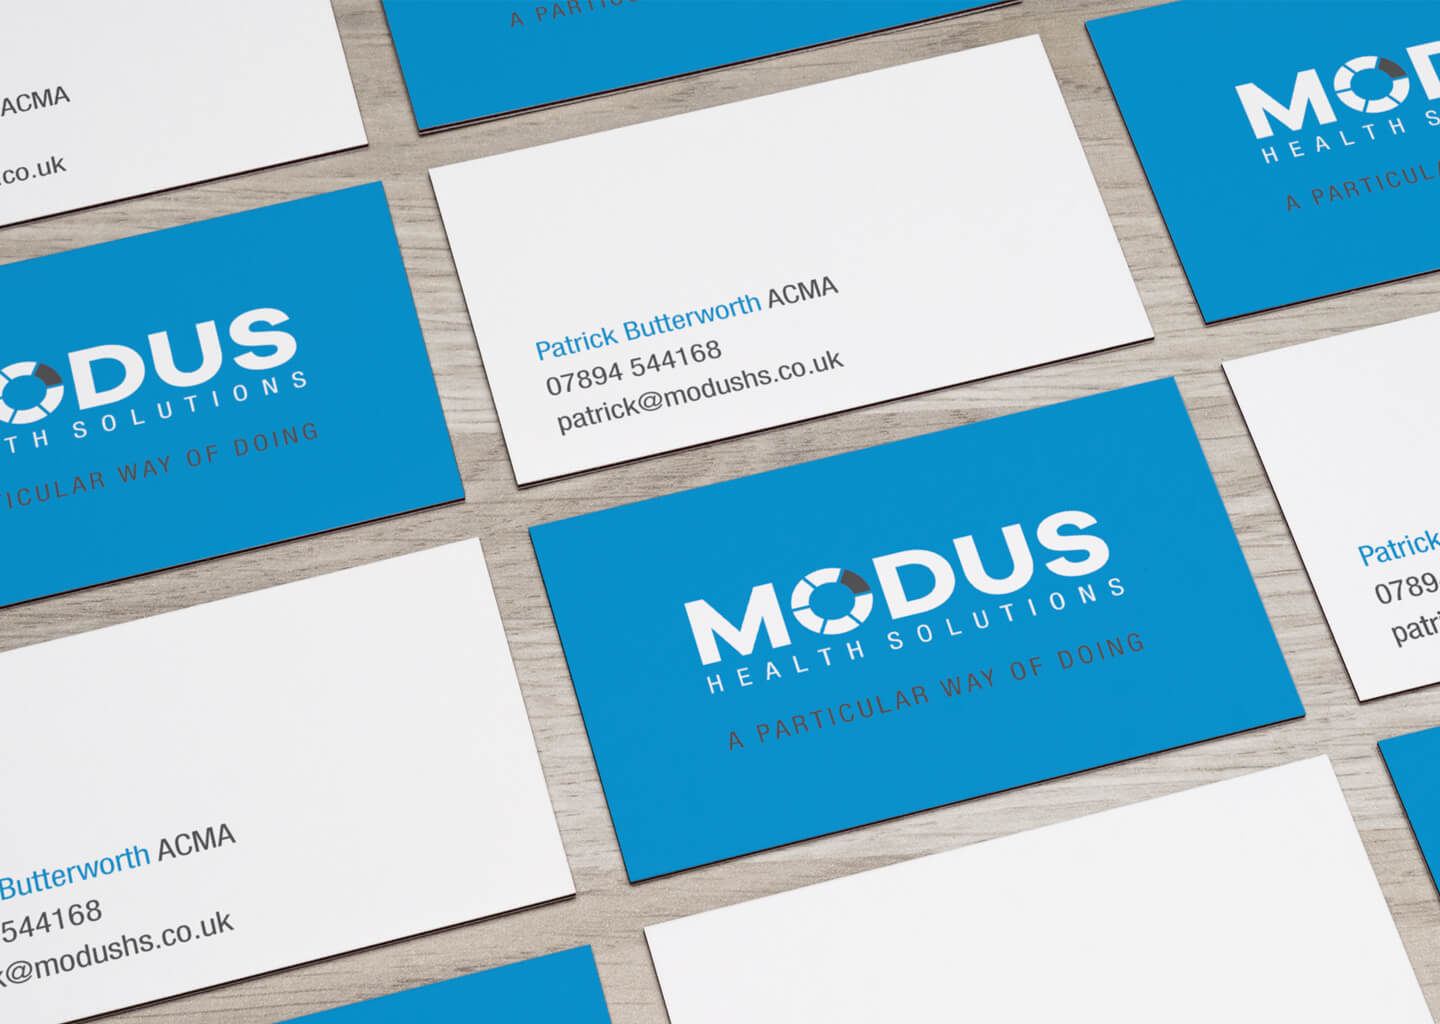 Modus-bus-cards